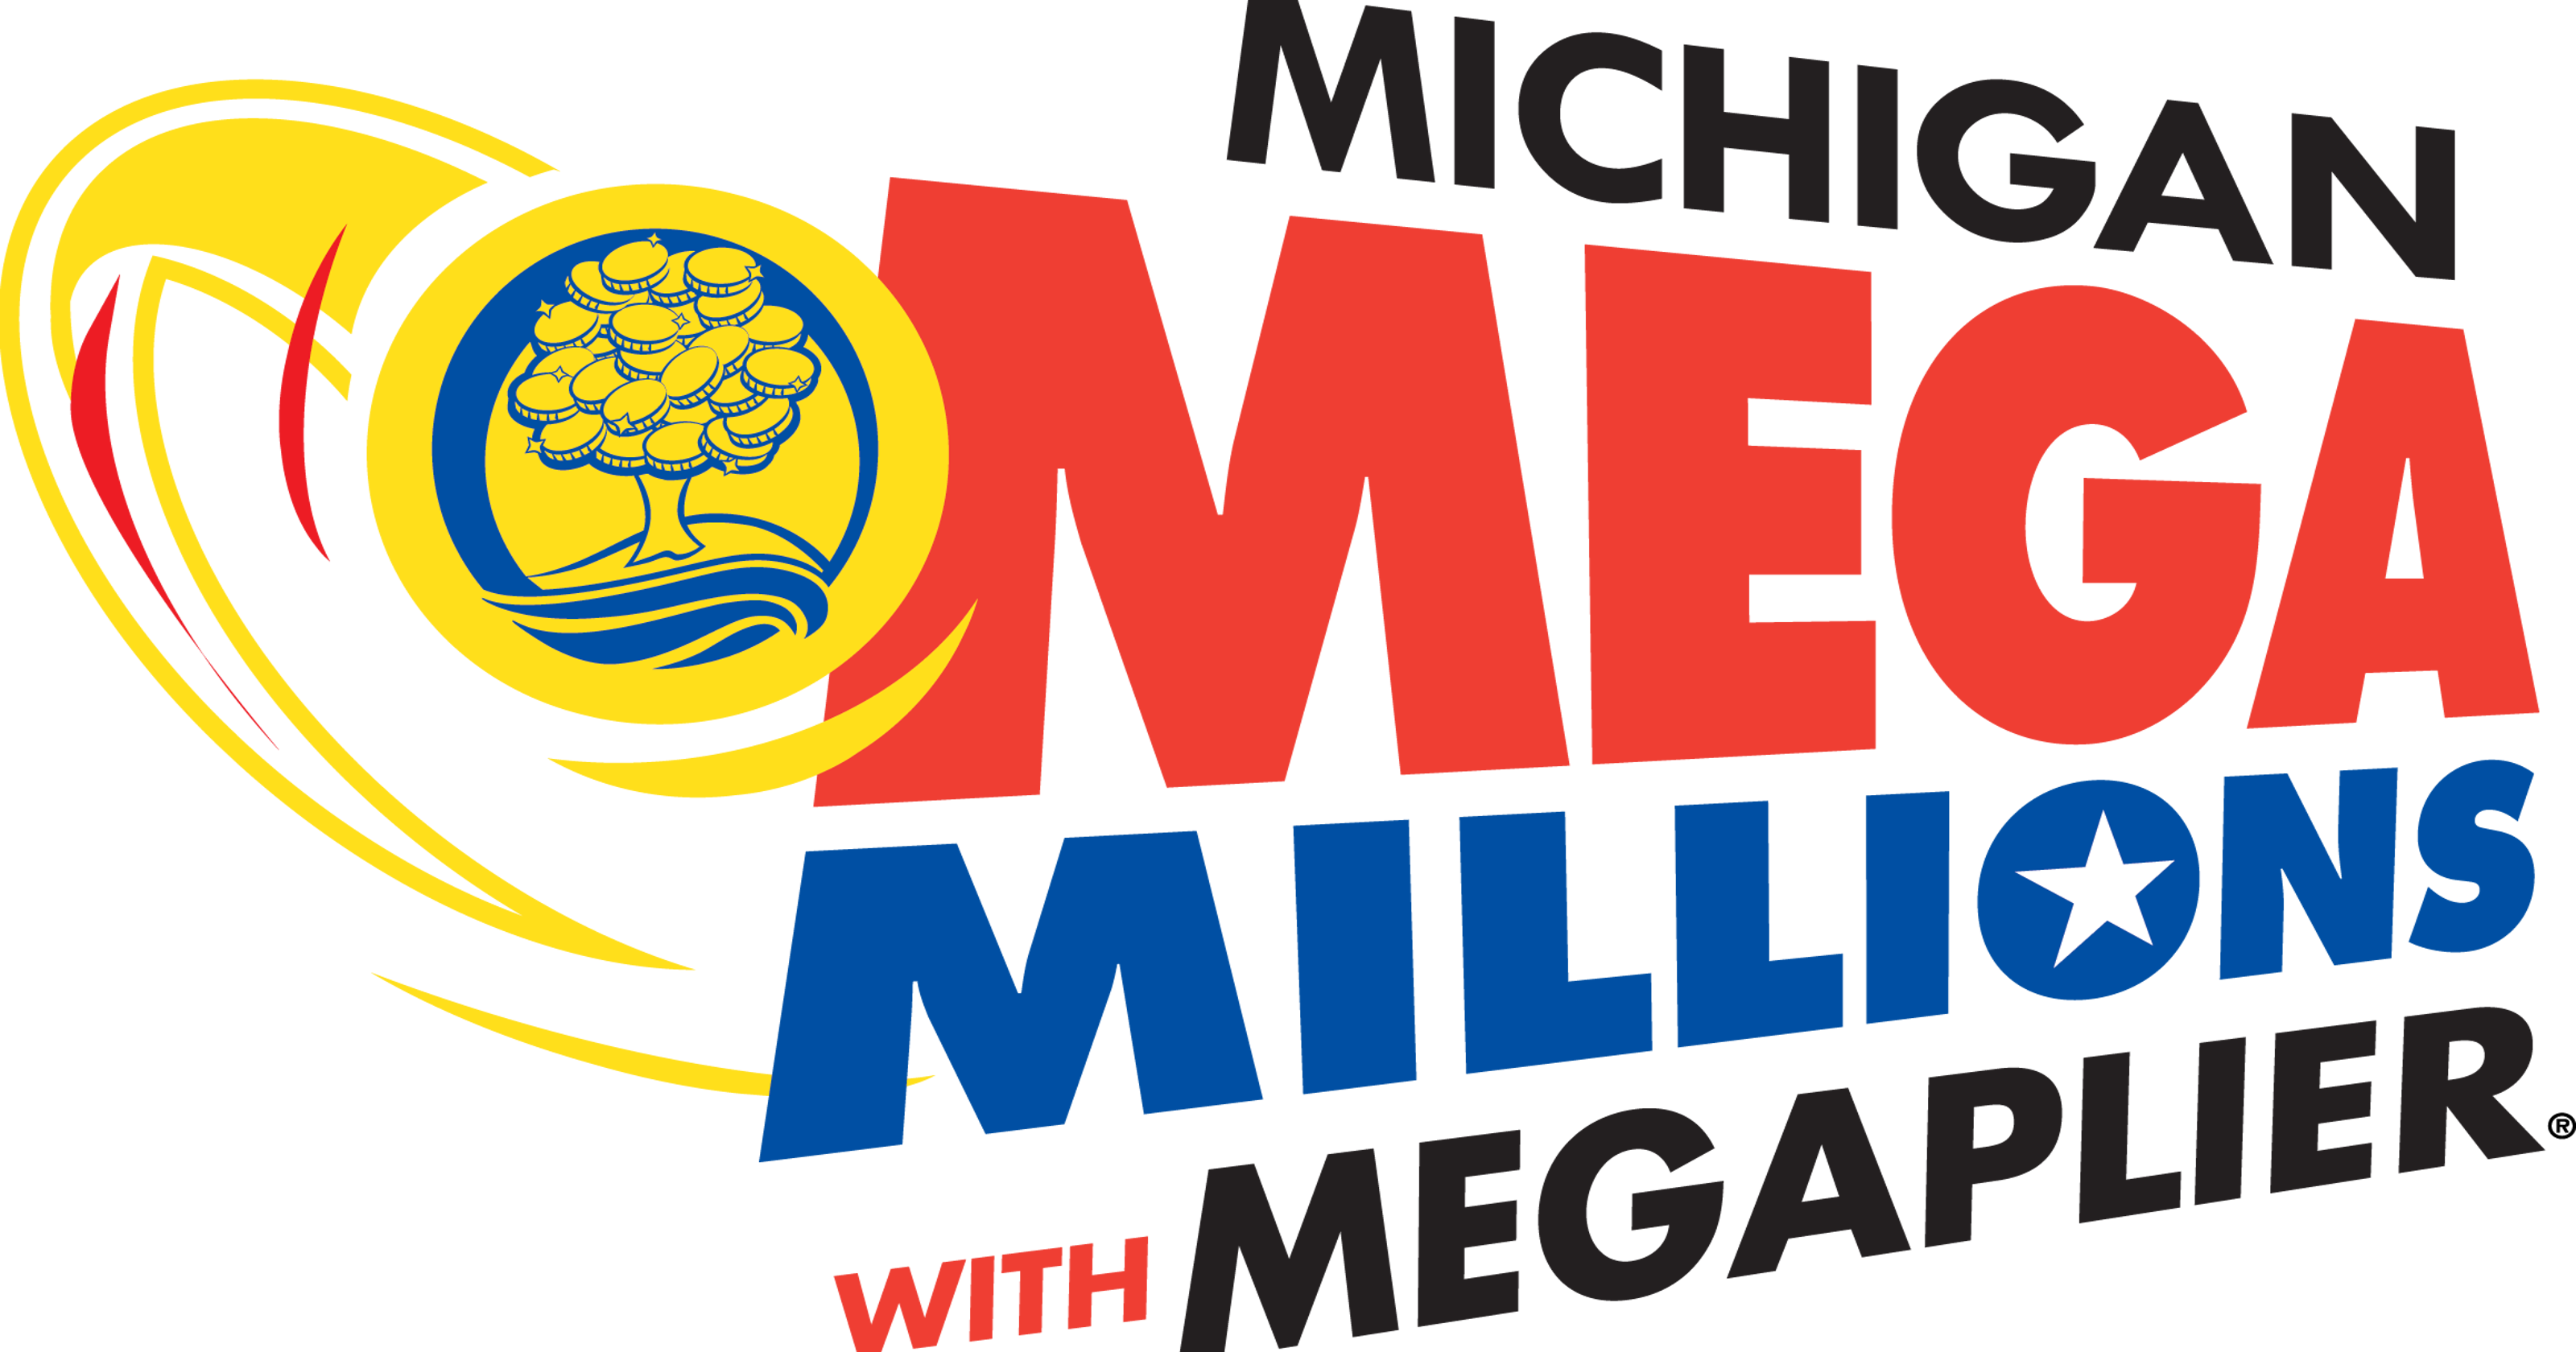 Winning 1M Mega Millions lottery ticket sold in Clinton Township